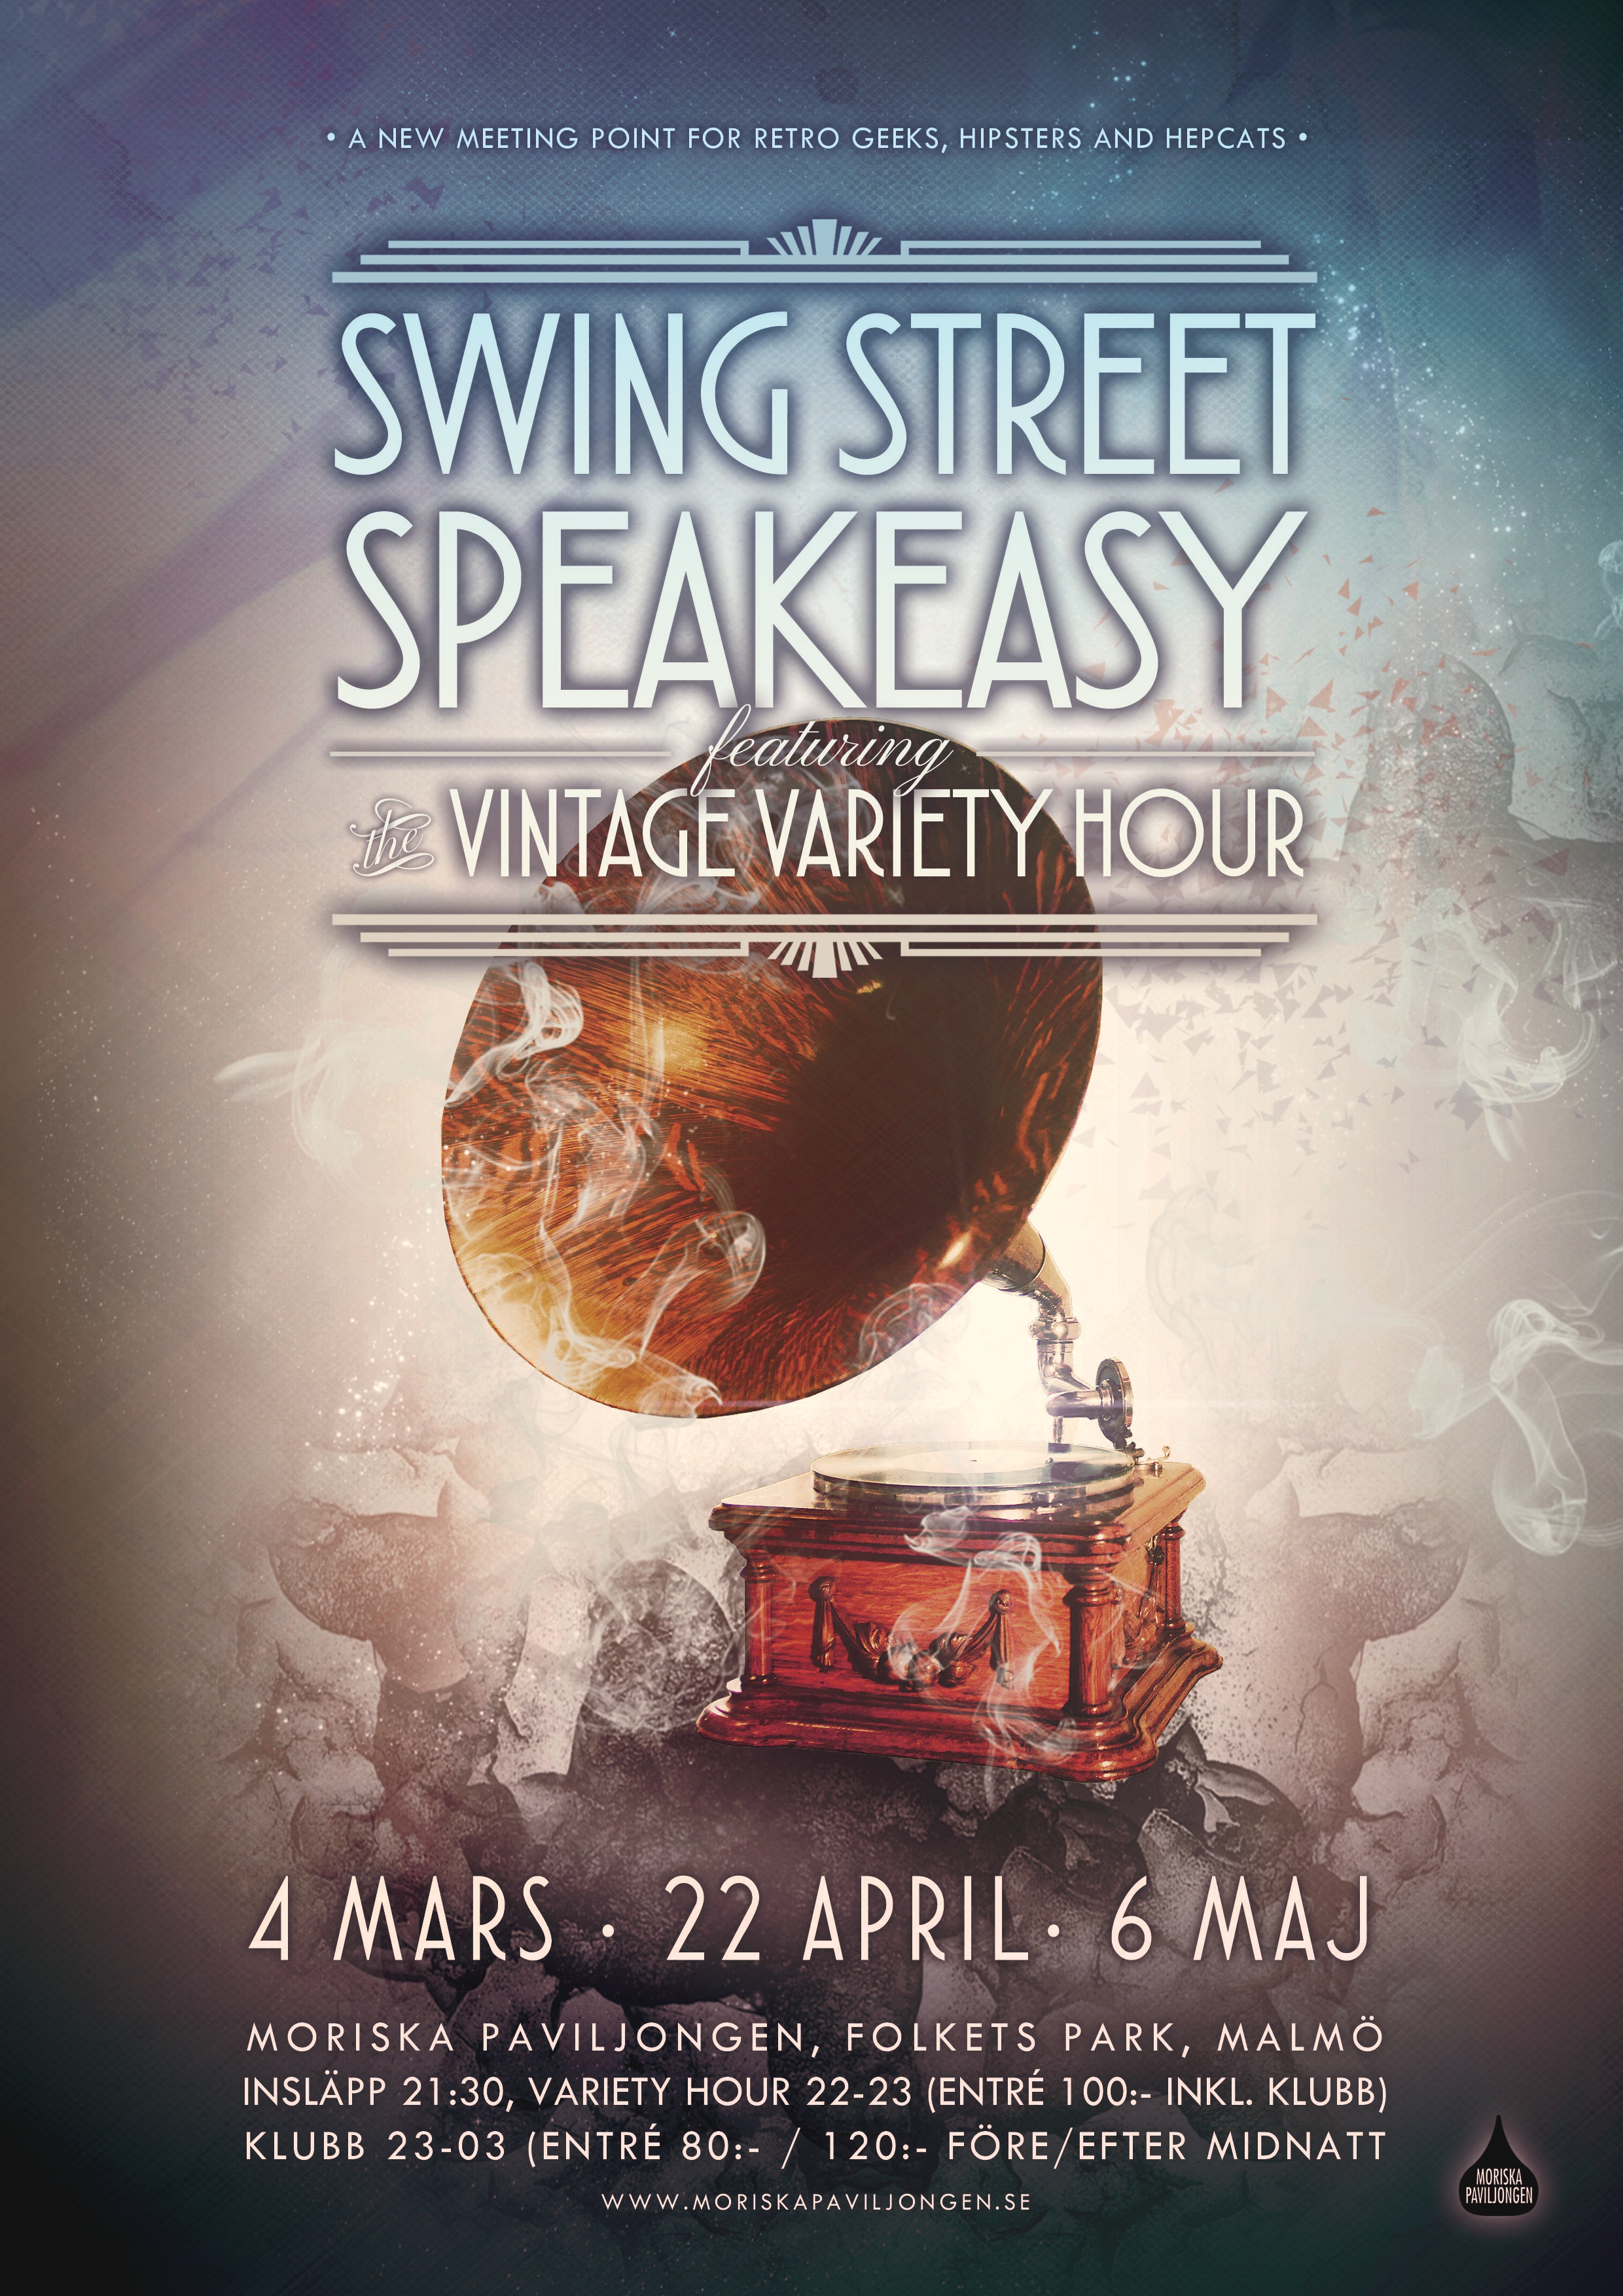 Swing Street Speakeasy and The Vintage Variety Hour